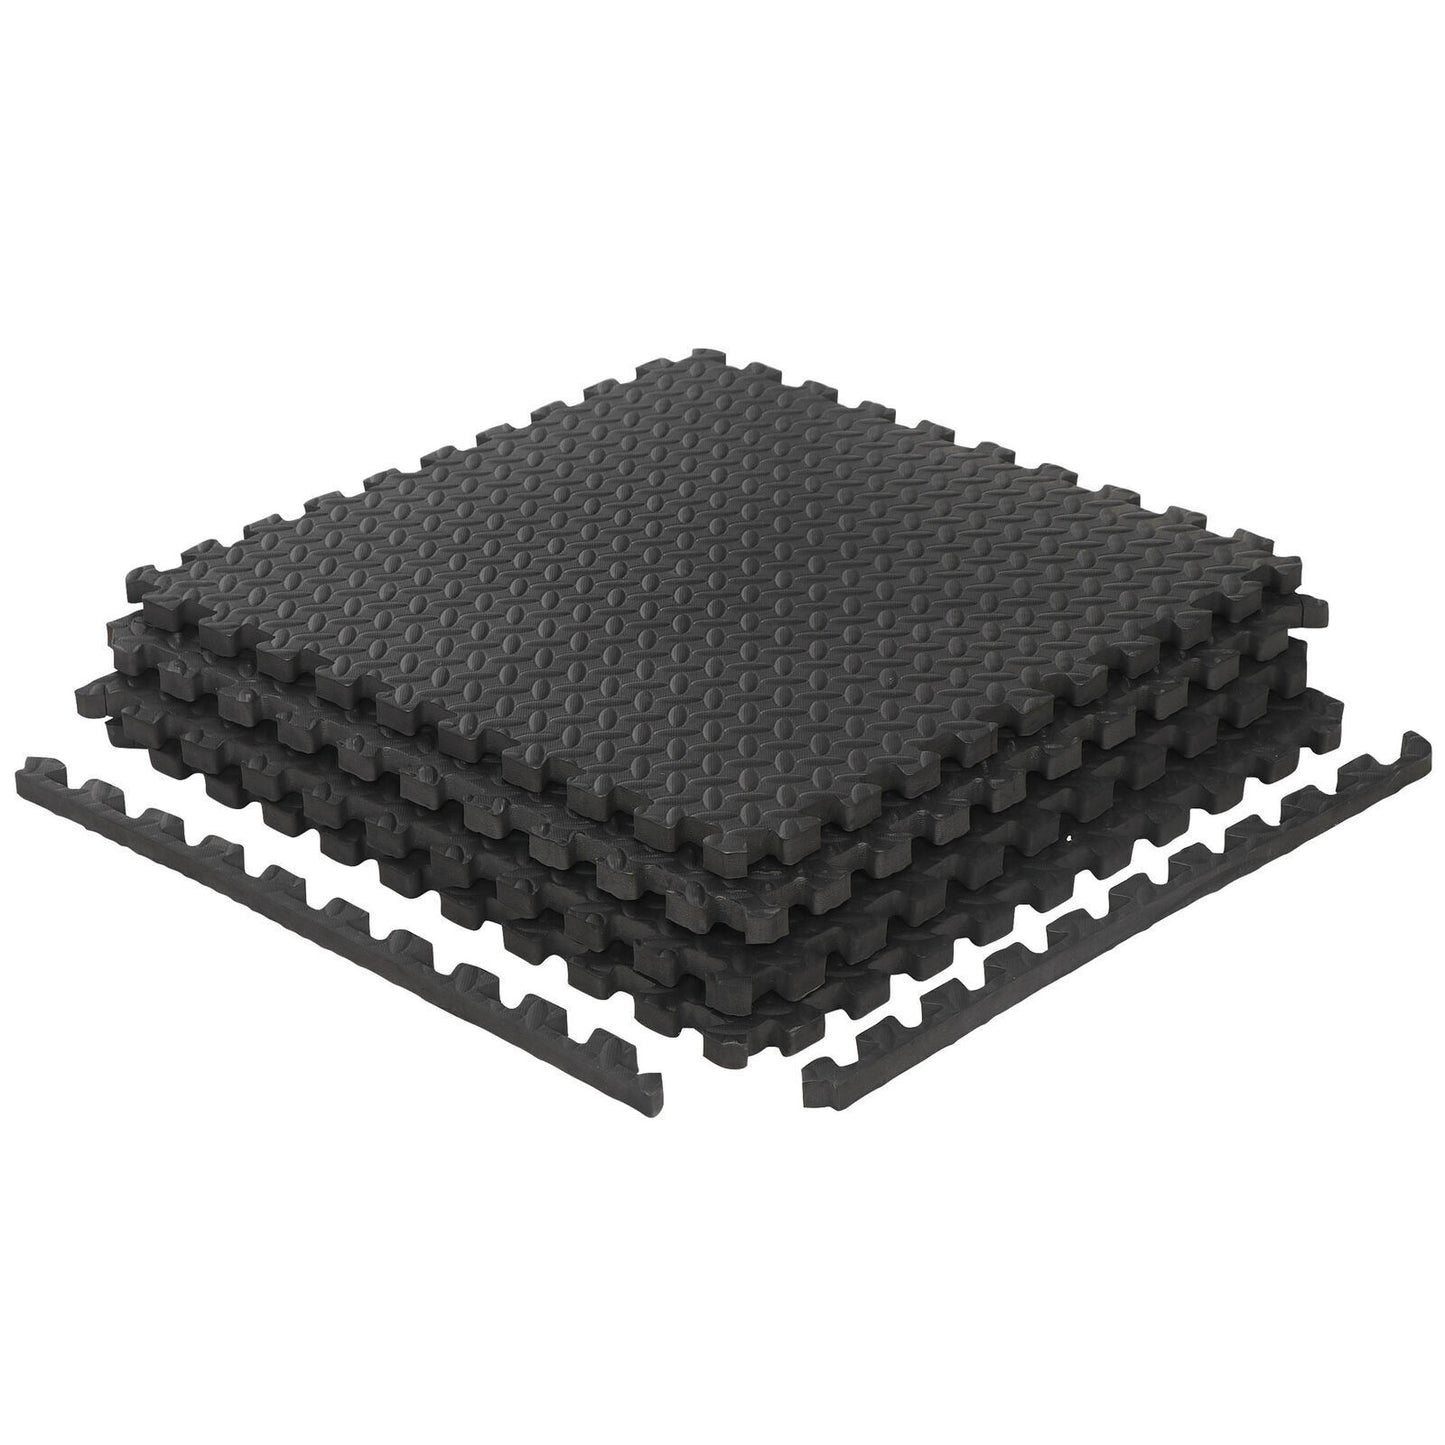 48pcs Puzzle Exercise Mat w/ EVA Foam Interlocking Tiles 96 Sq Ft GYM Home